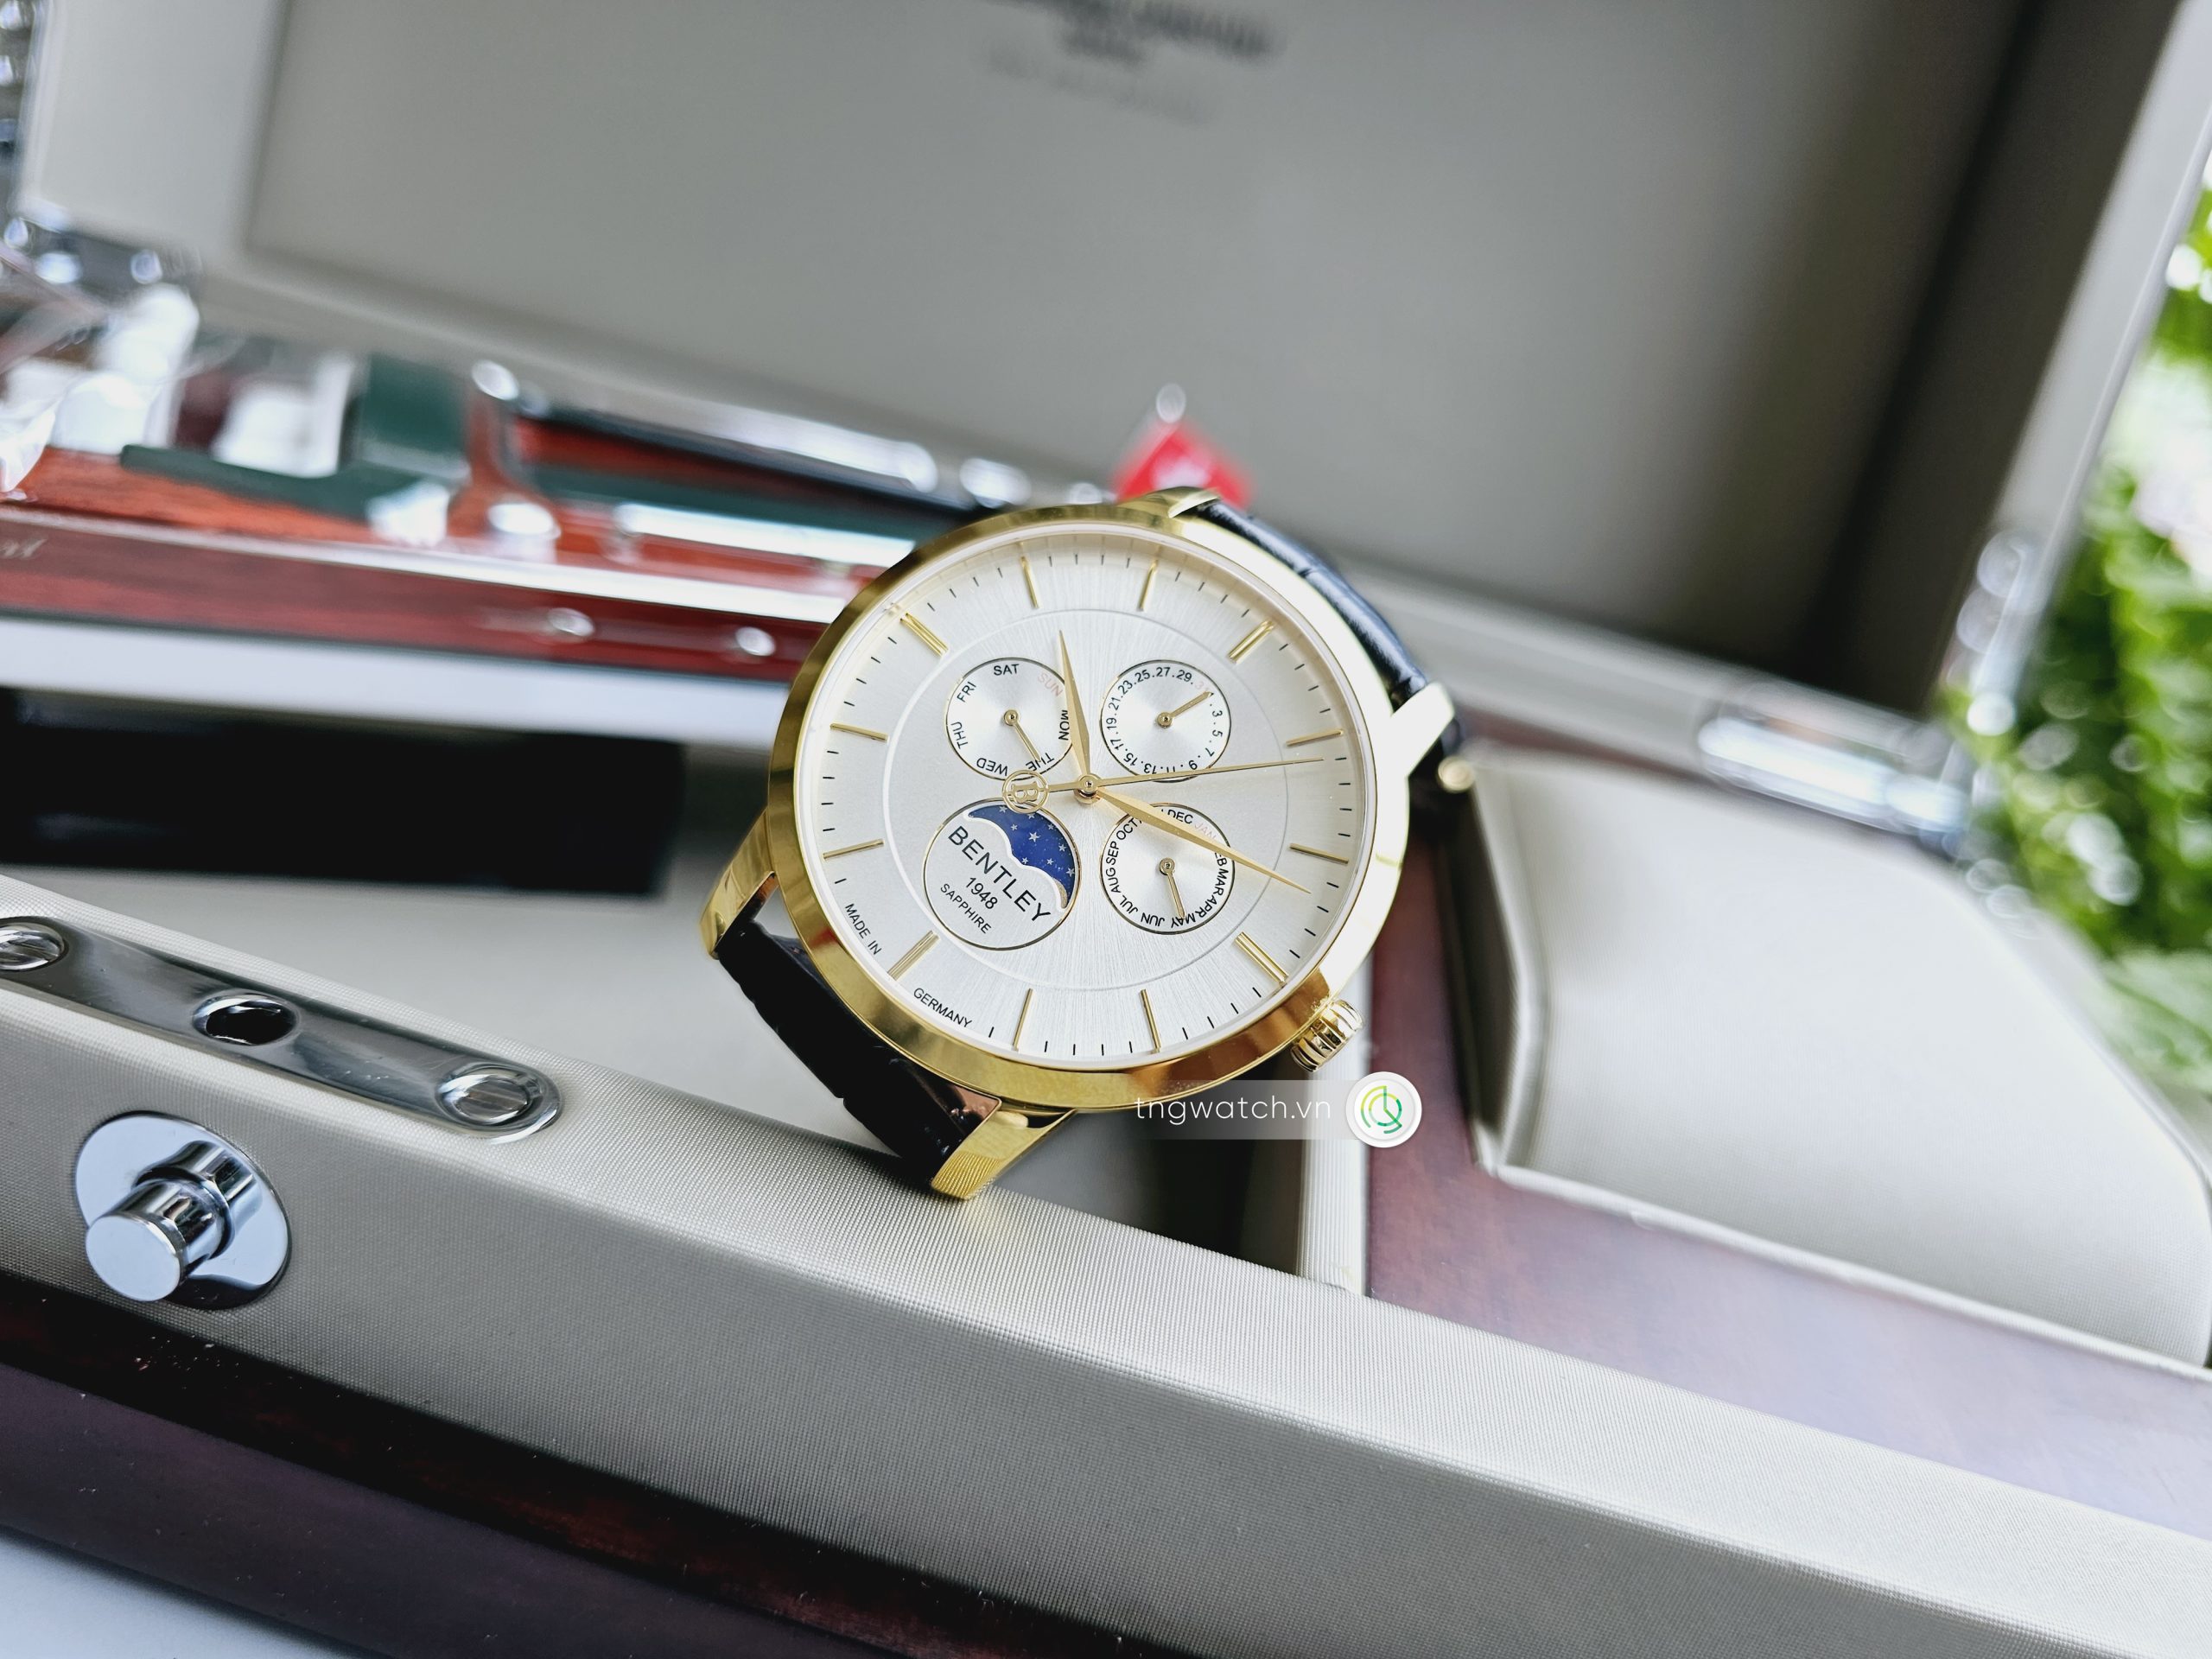 Đồng hồ Bentley BL1806-20MKWB